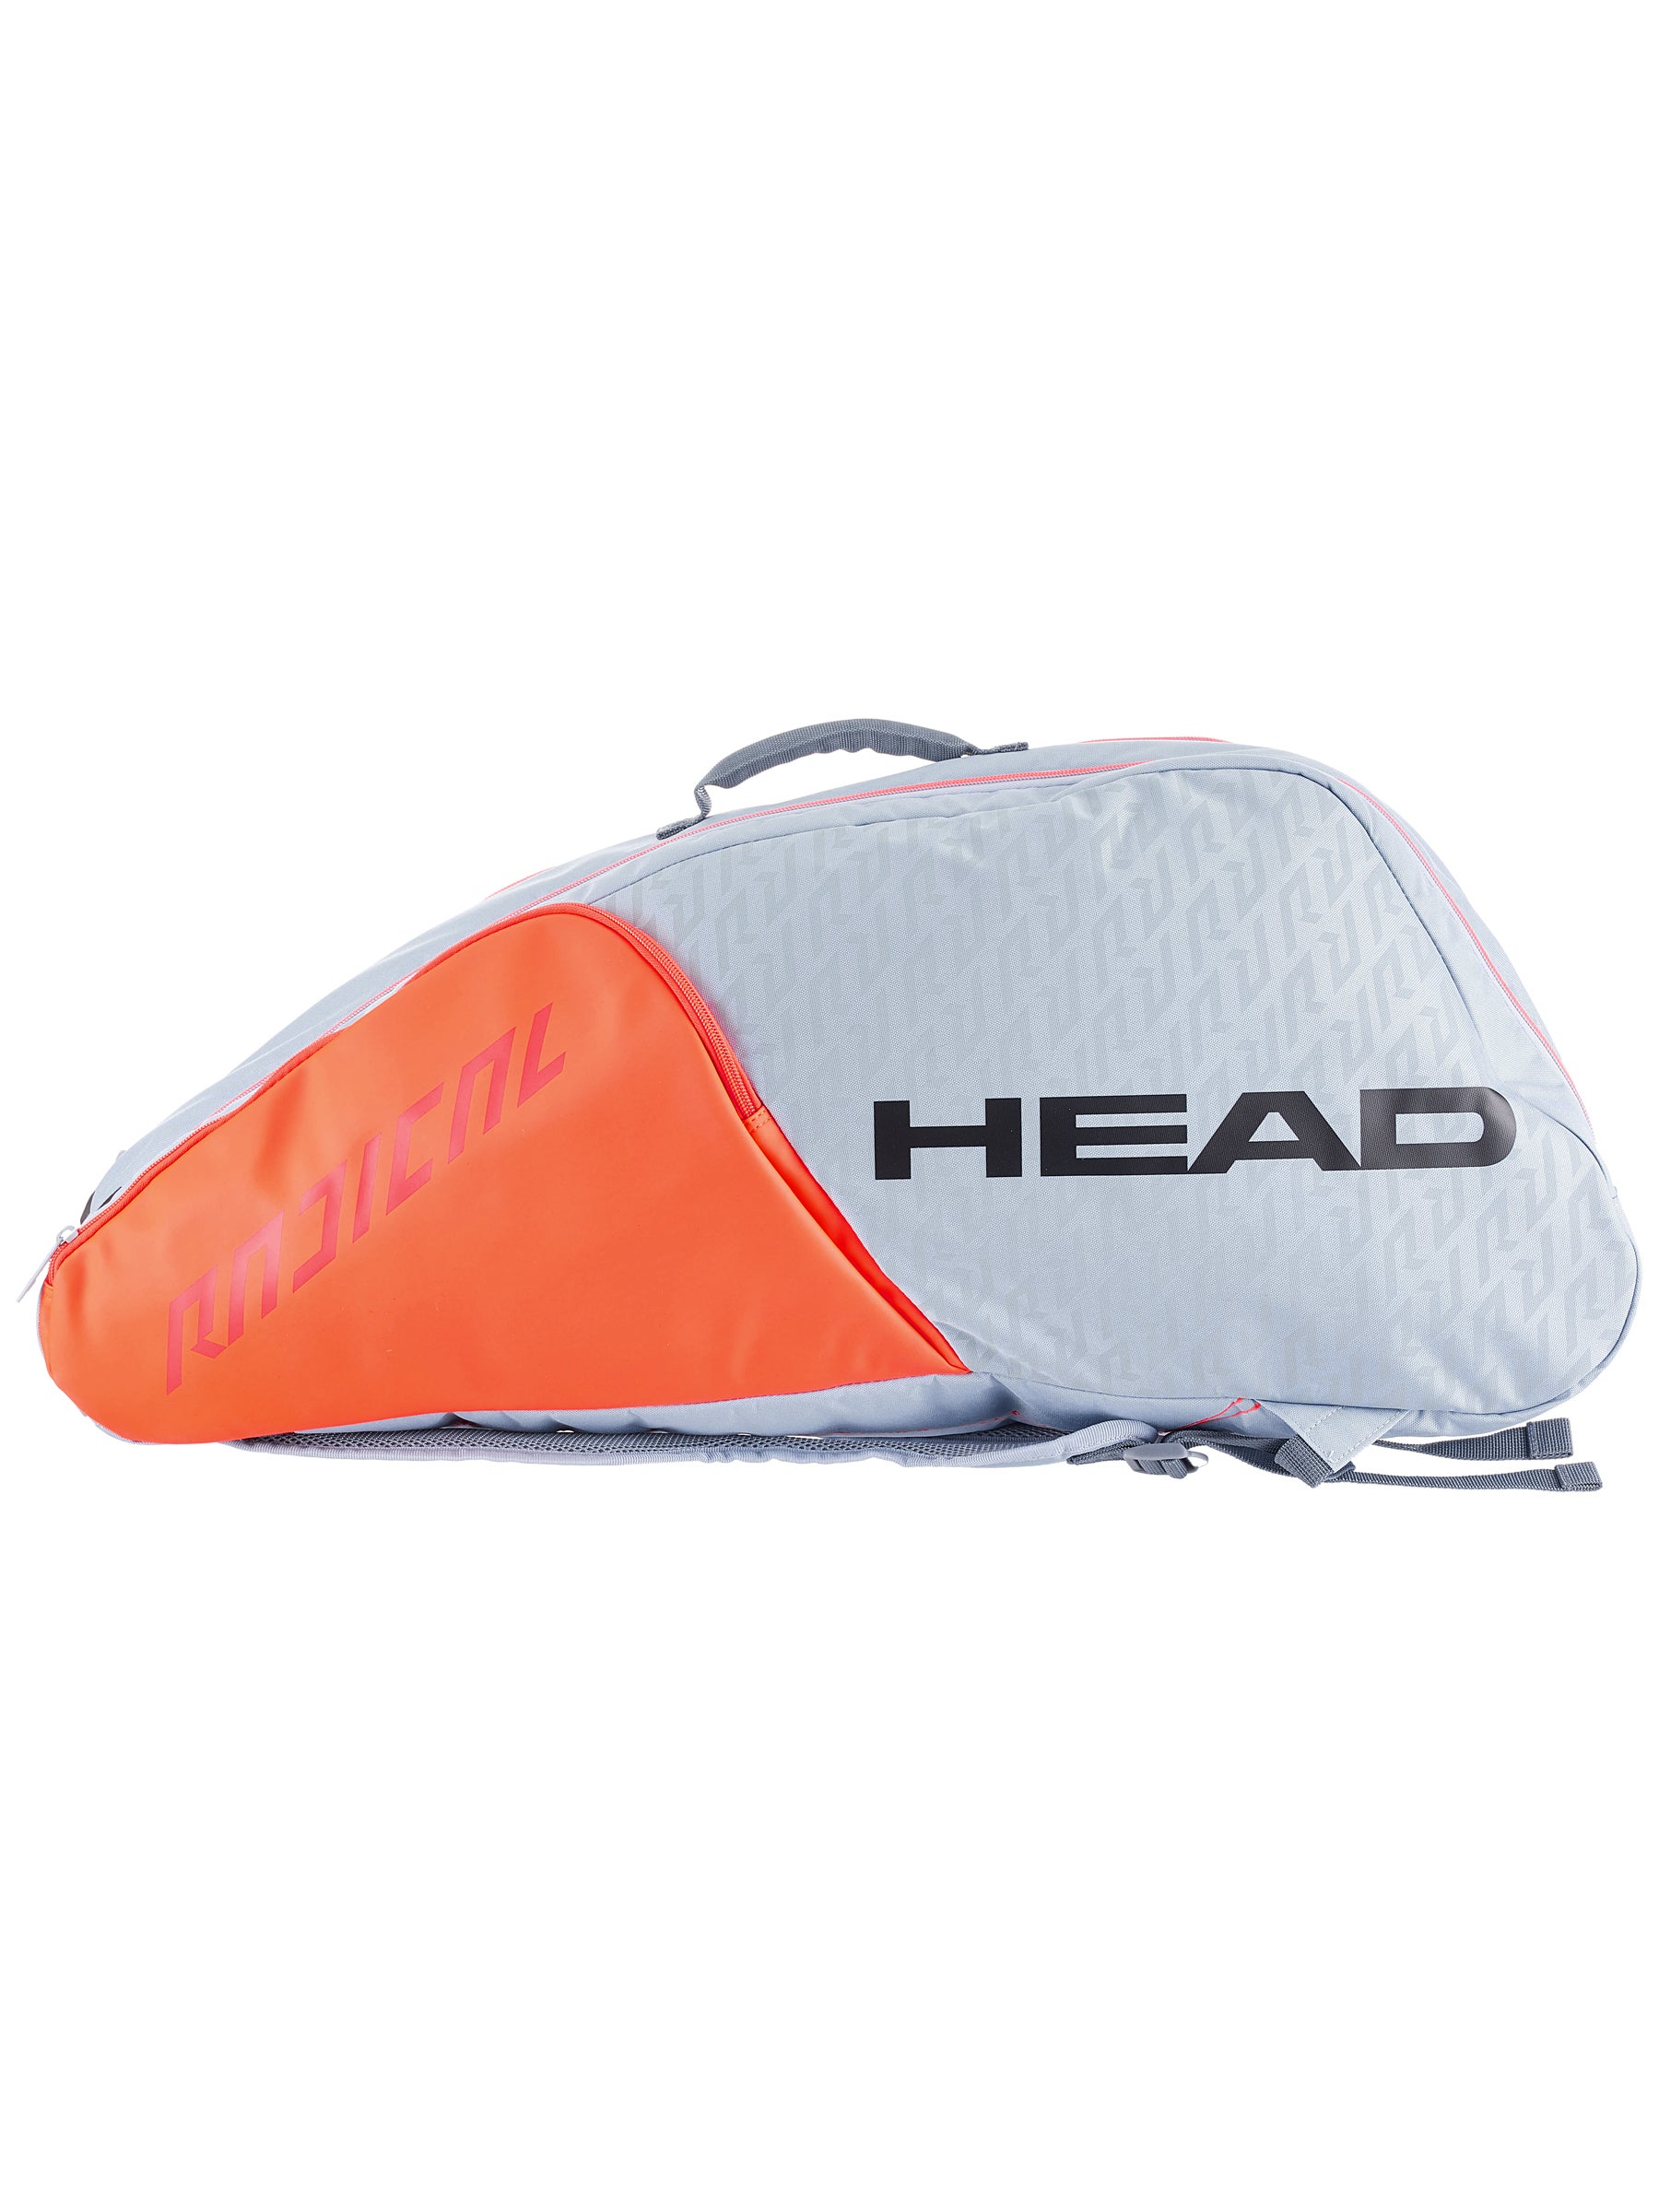 6R HEAD Womens Women‘s Combi Tennis Bag Grey/Tan 